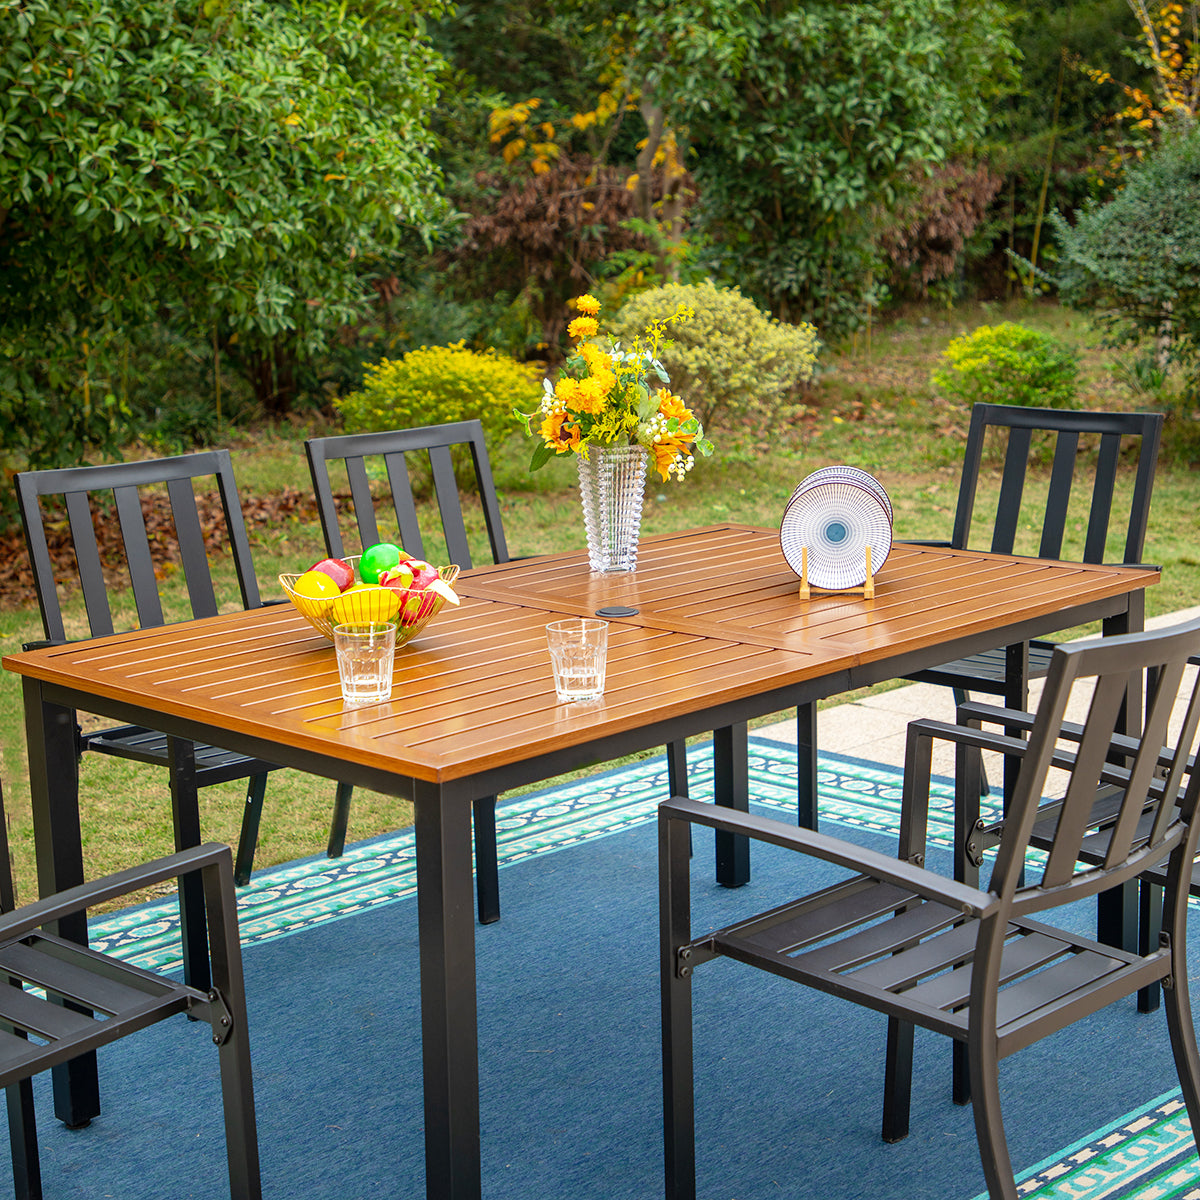 PHI VILLA 7-Piece Patio Dining Set Teak-grain Table & Stackable Steel Chairs